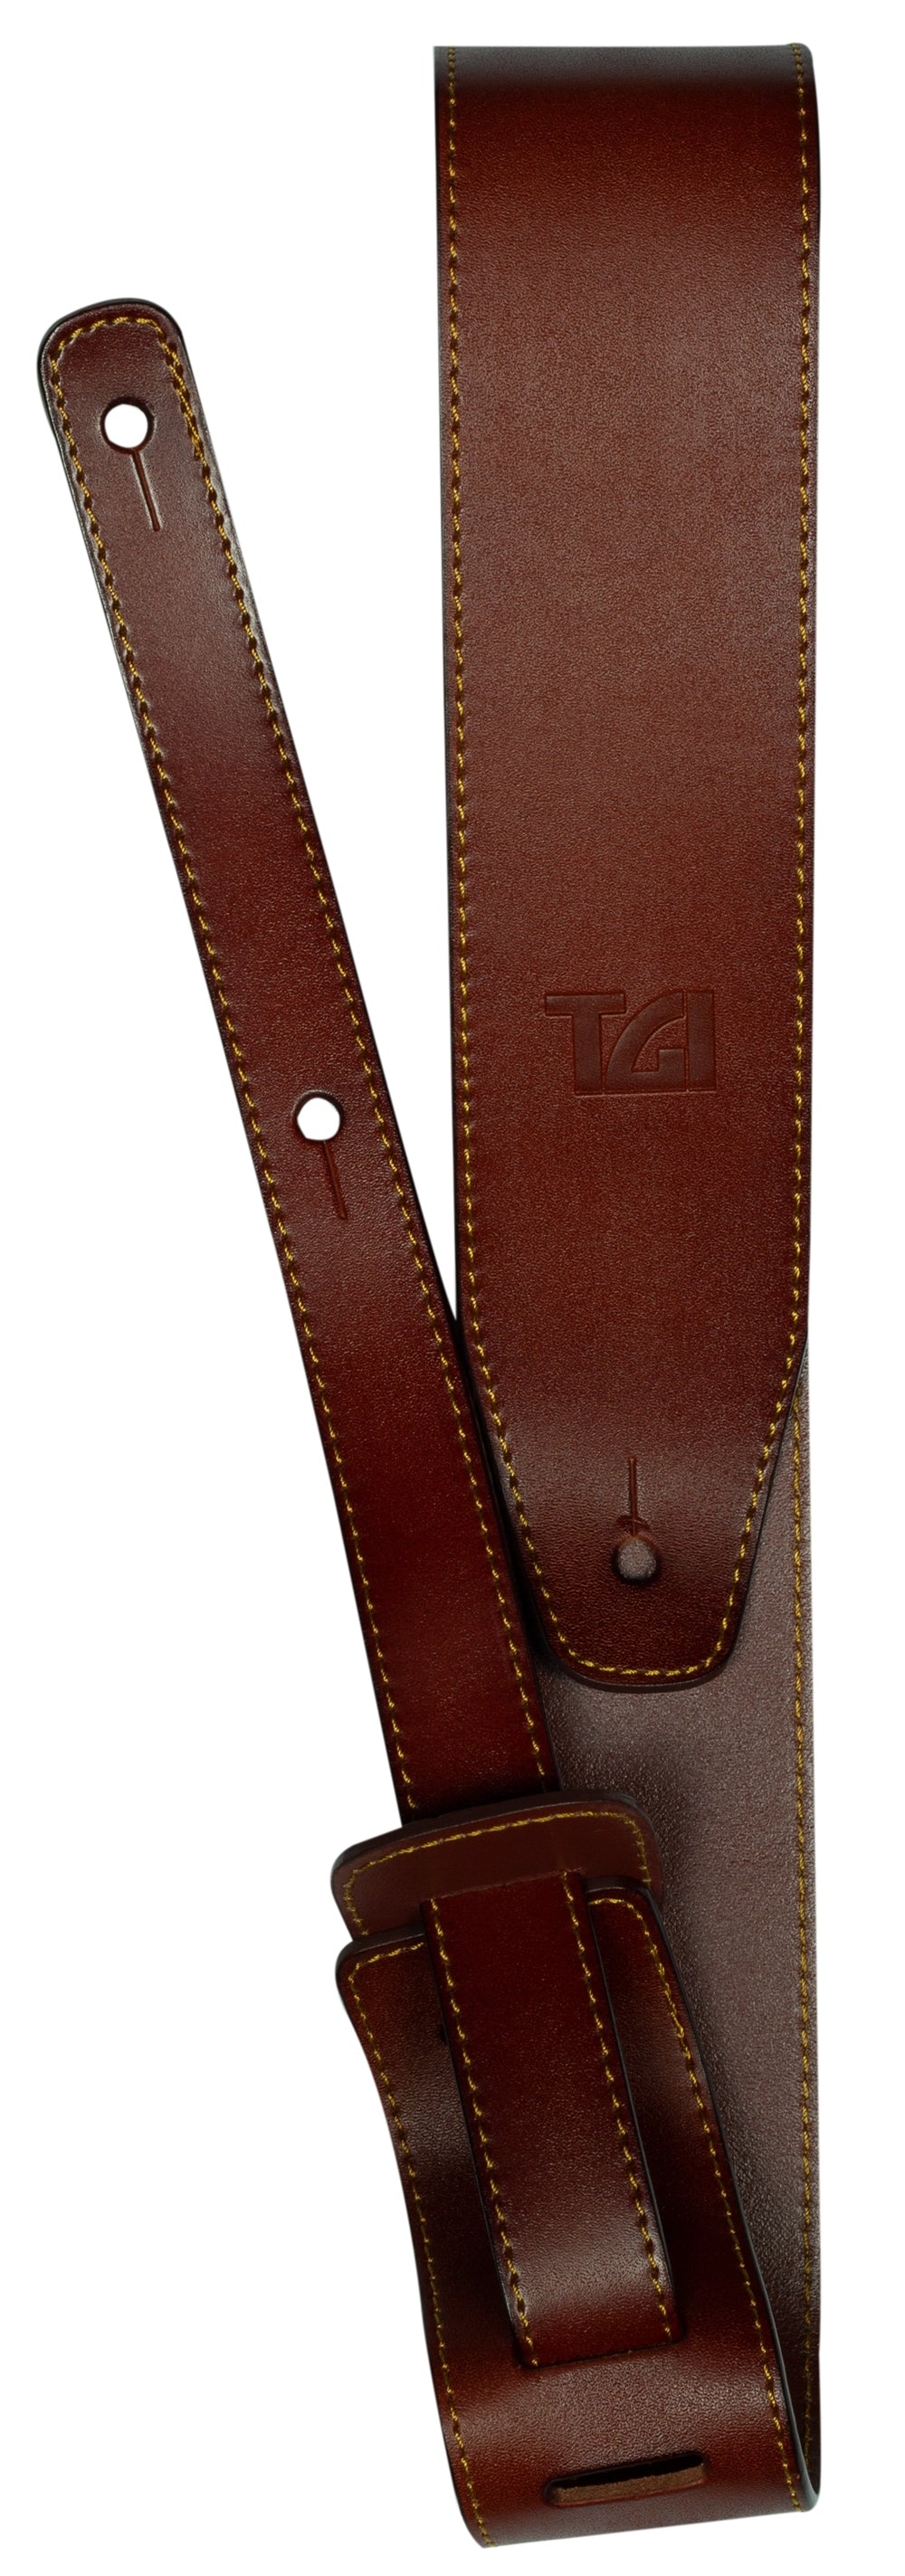 TGI Leather Guitar Strap - Brown